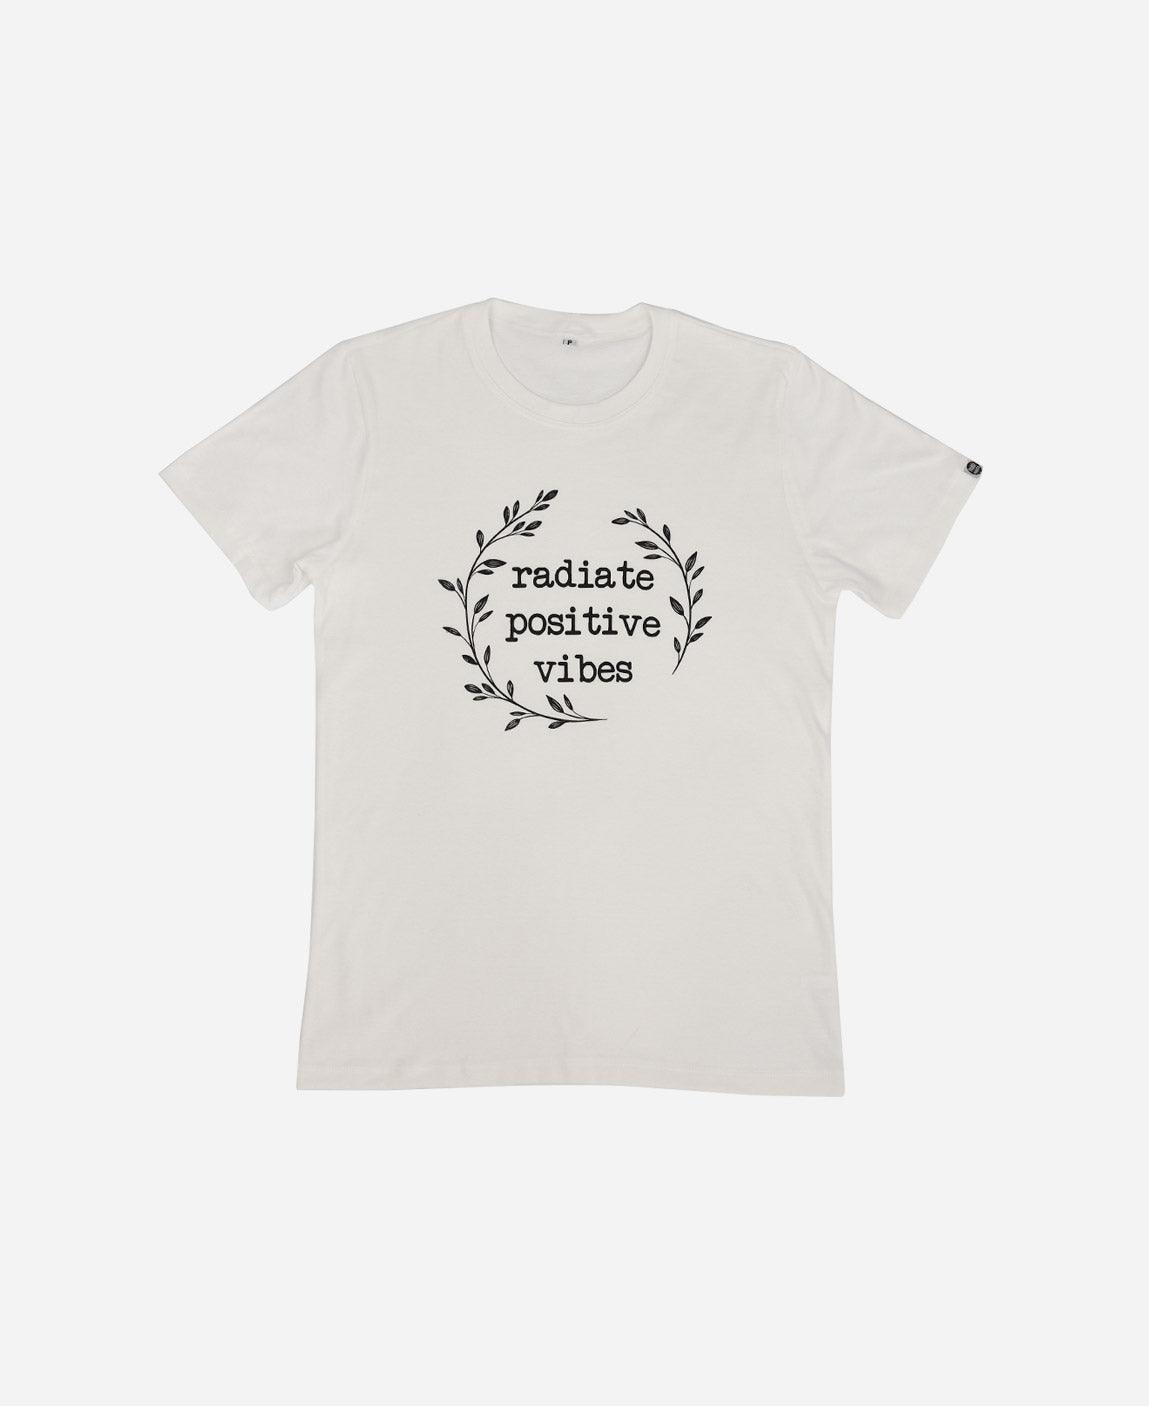 Camiseta Adulto Radiate Positive Vibes - MiniMalista Baby - b2b, com-desconto-mm10, Meia Estação, Menino, Neutro, Unissex -bebê-minimalista-estiloso